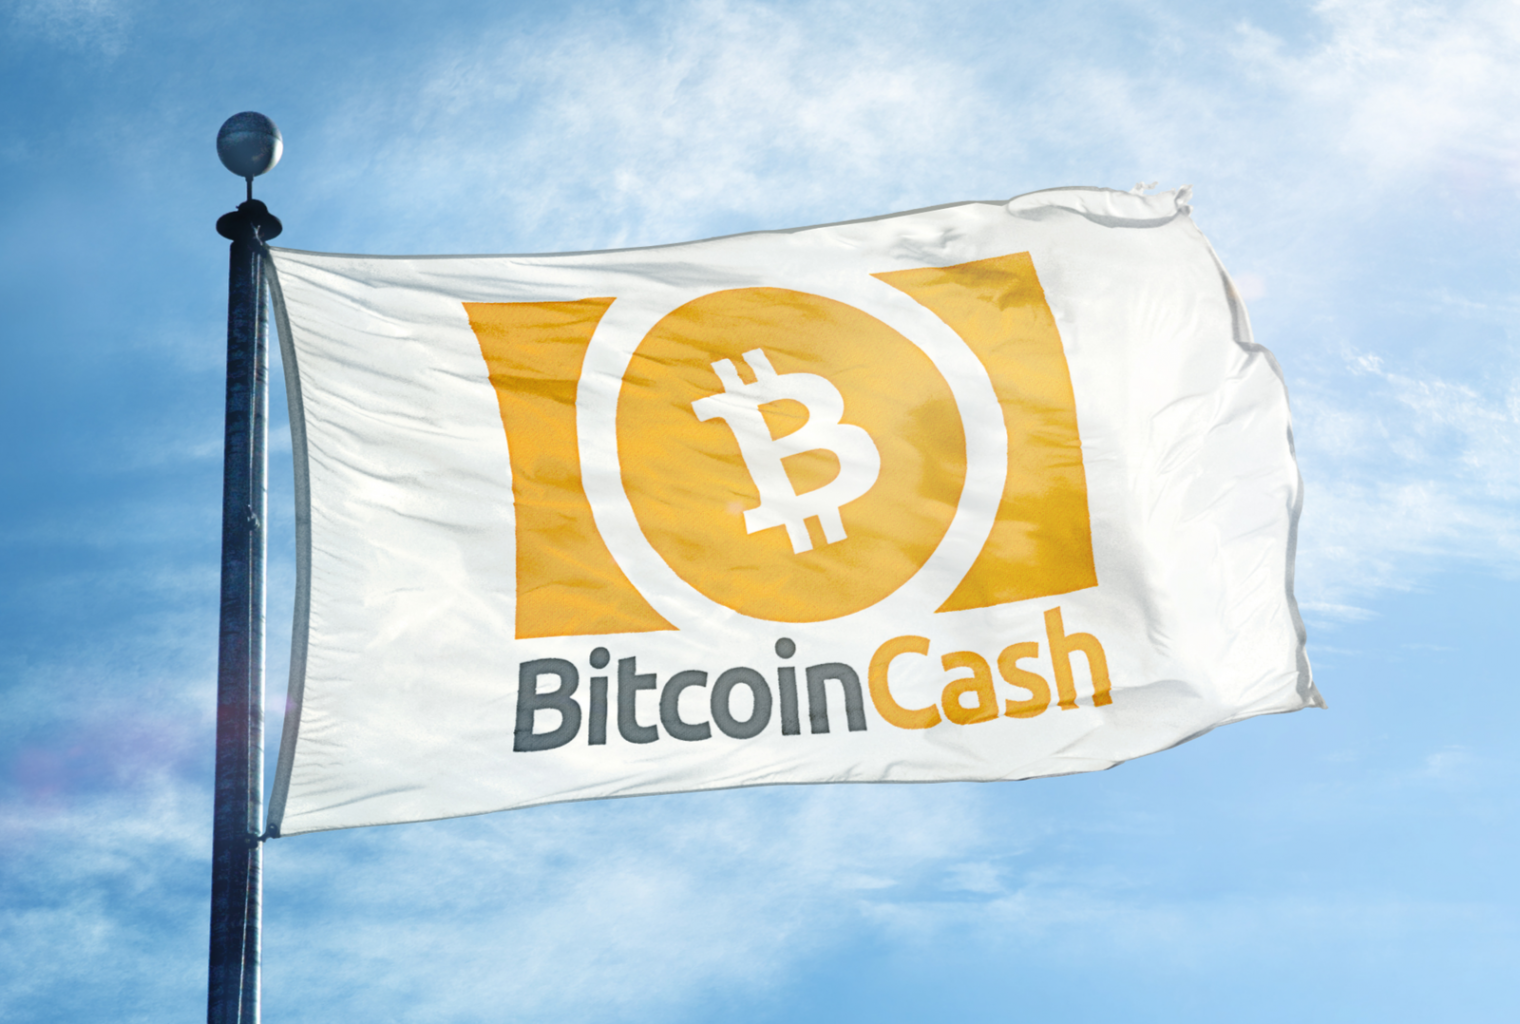 Flag with Bitcoin Cash logo on it